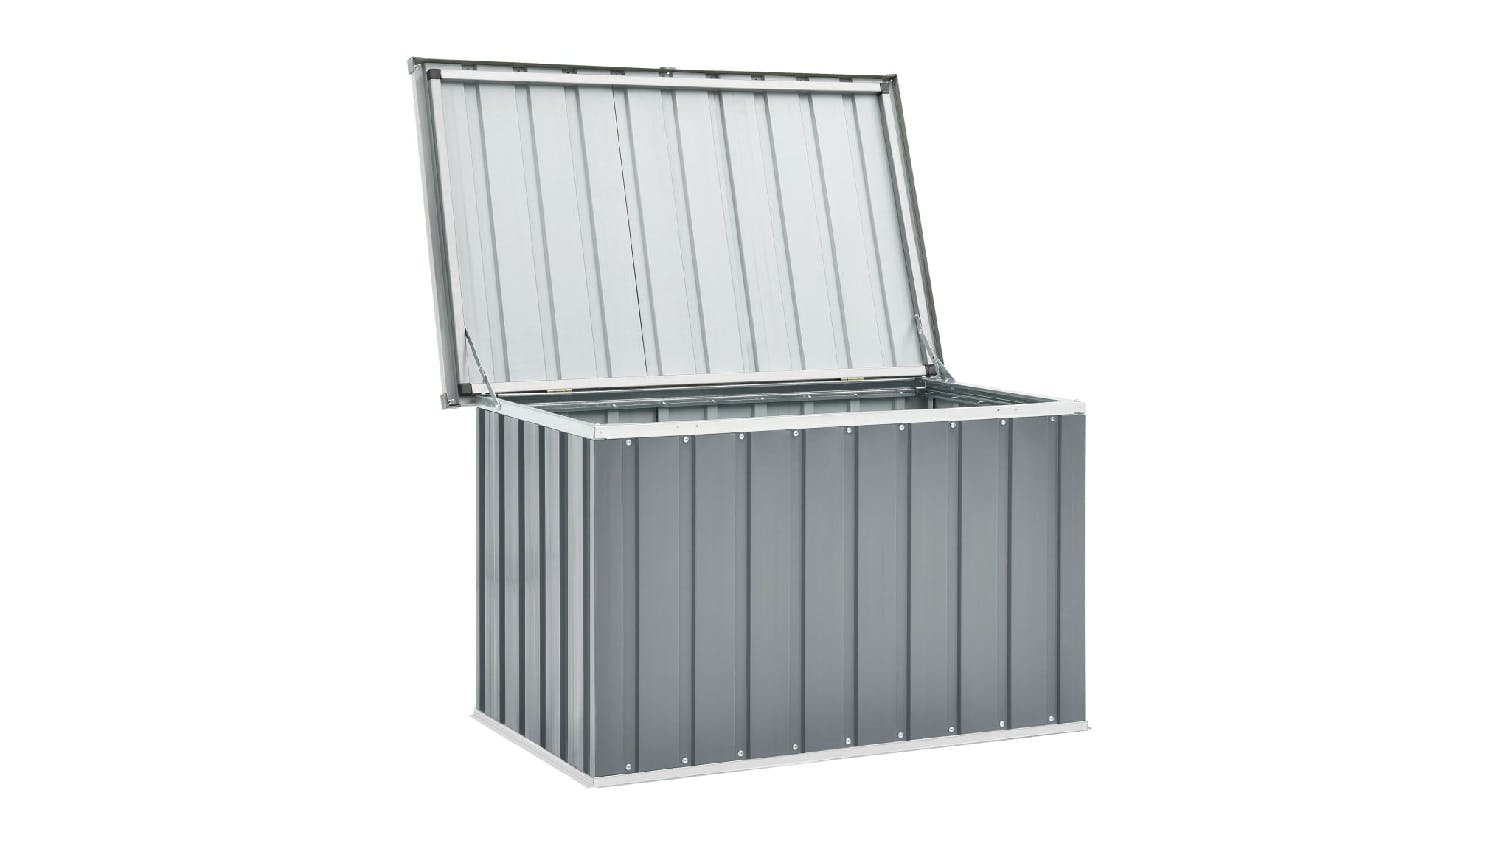 NNEVL Garden Storage Box 109 x 67 x 65cm - Grey